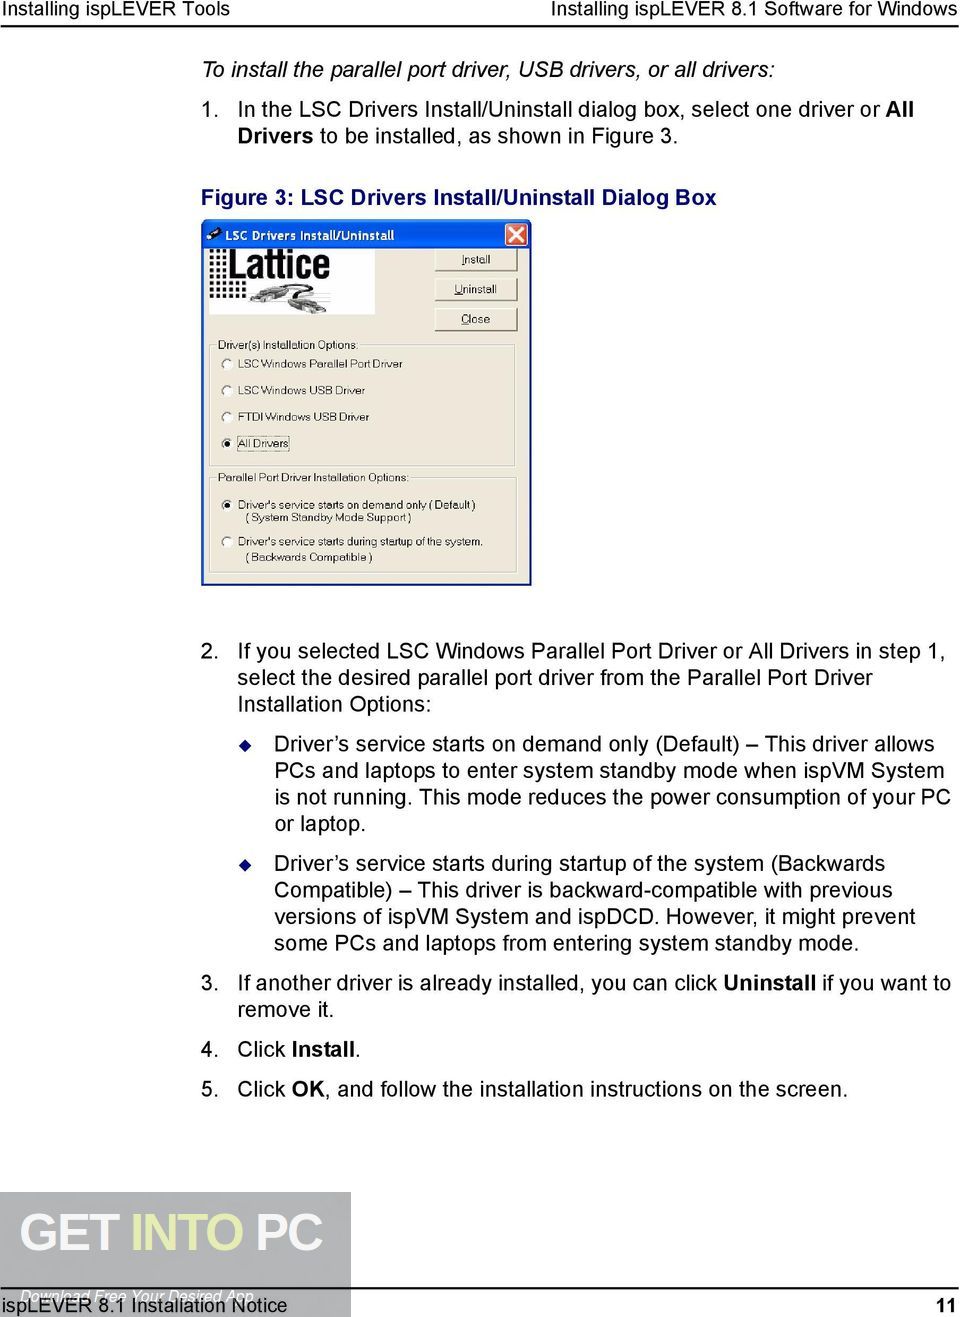 ispLever 7.1 Lattice Semiconductor 2008 Offline Installer Download-GetintoPC.com